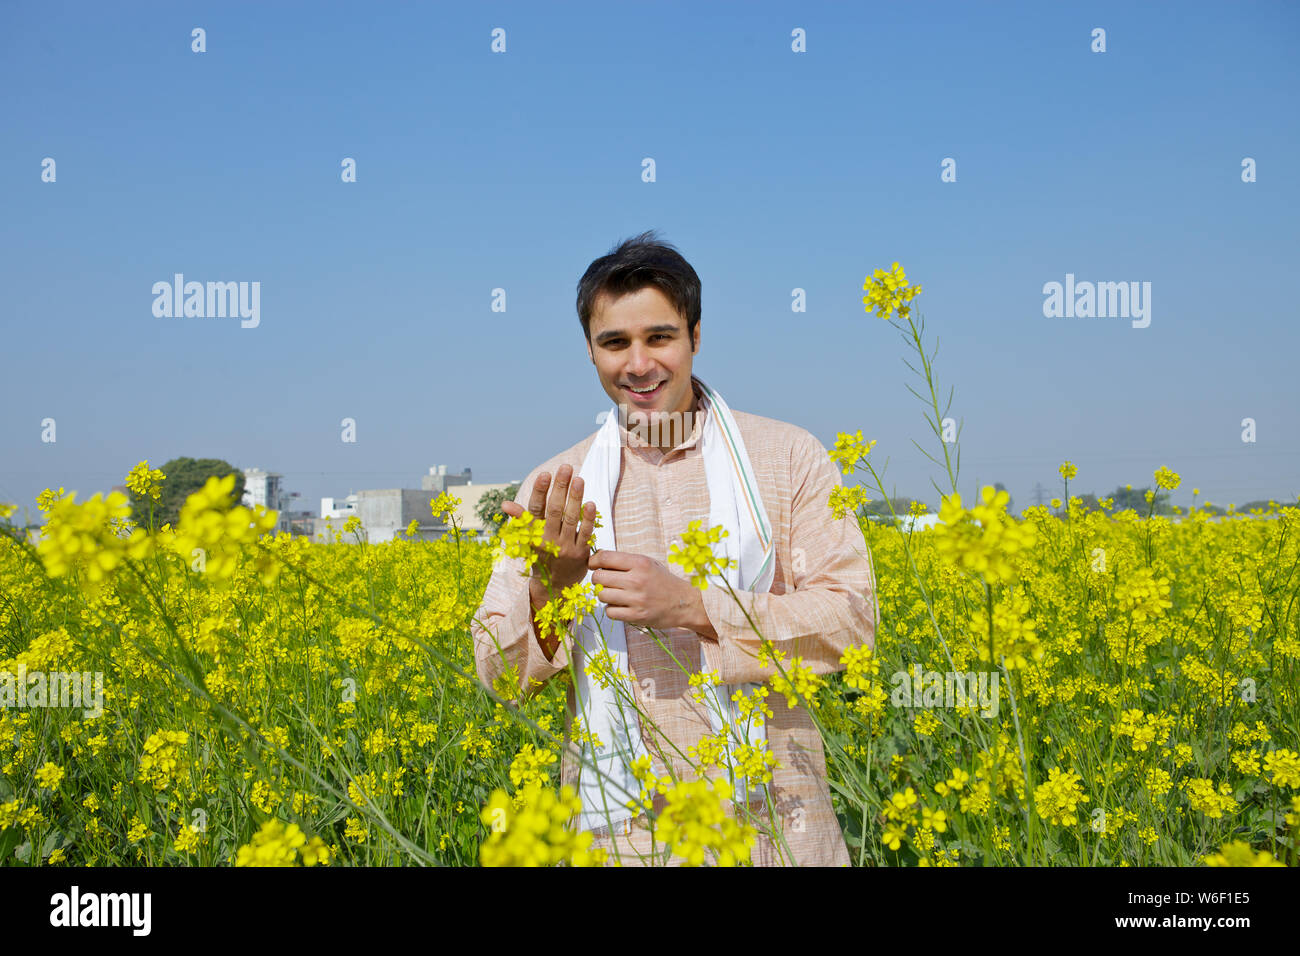 Farmer examining mustard flowers in a field Stock Photo